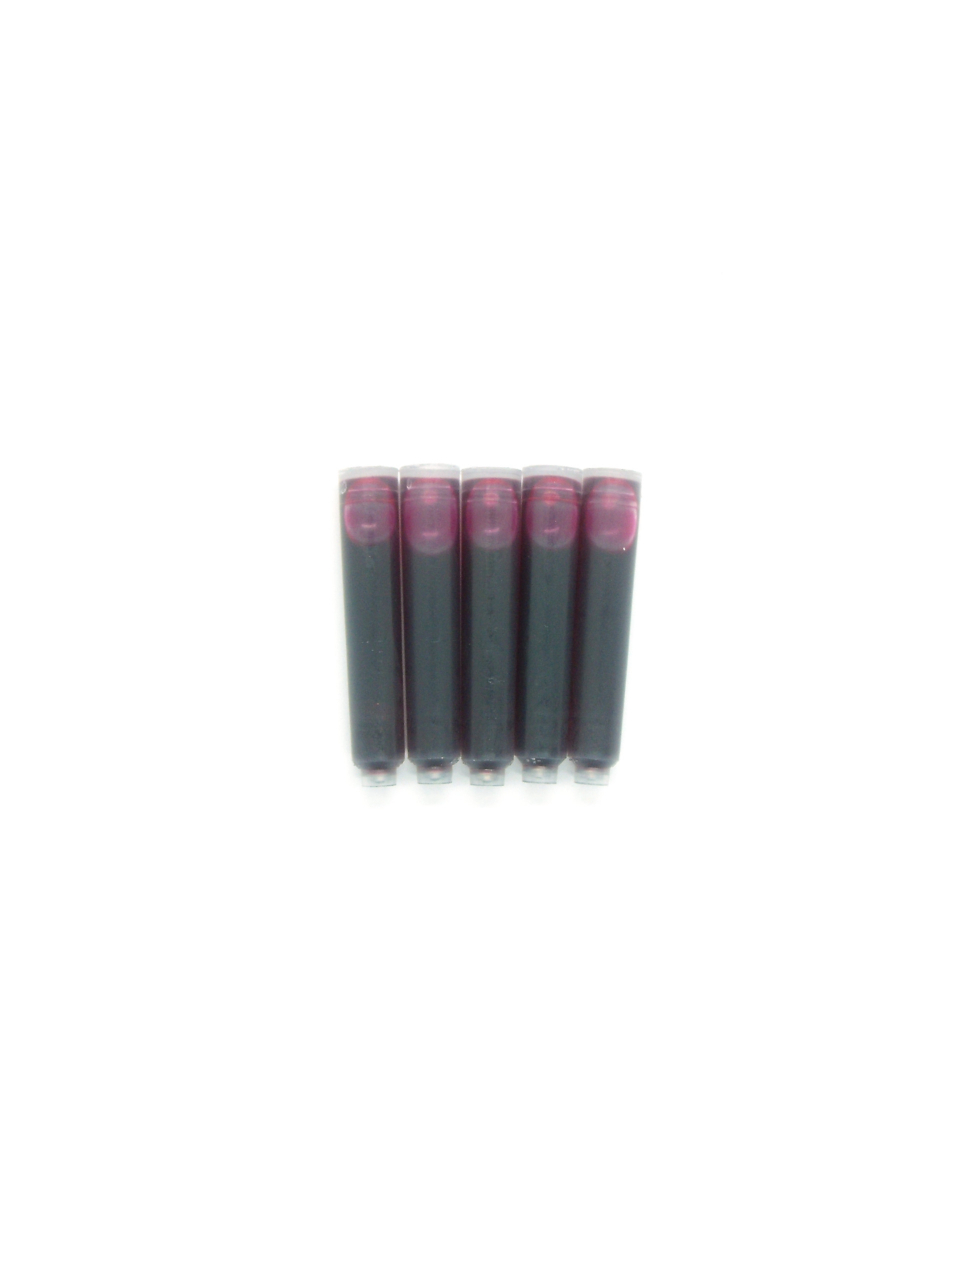 PenConverter Ink Cartridges For Schmidt Fountain Pens (Pink)